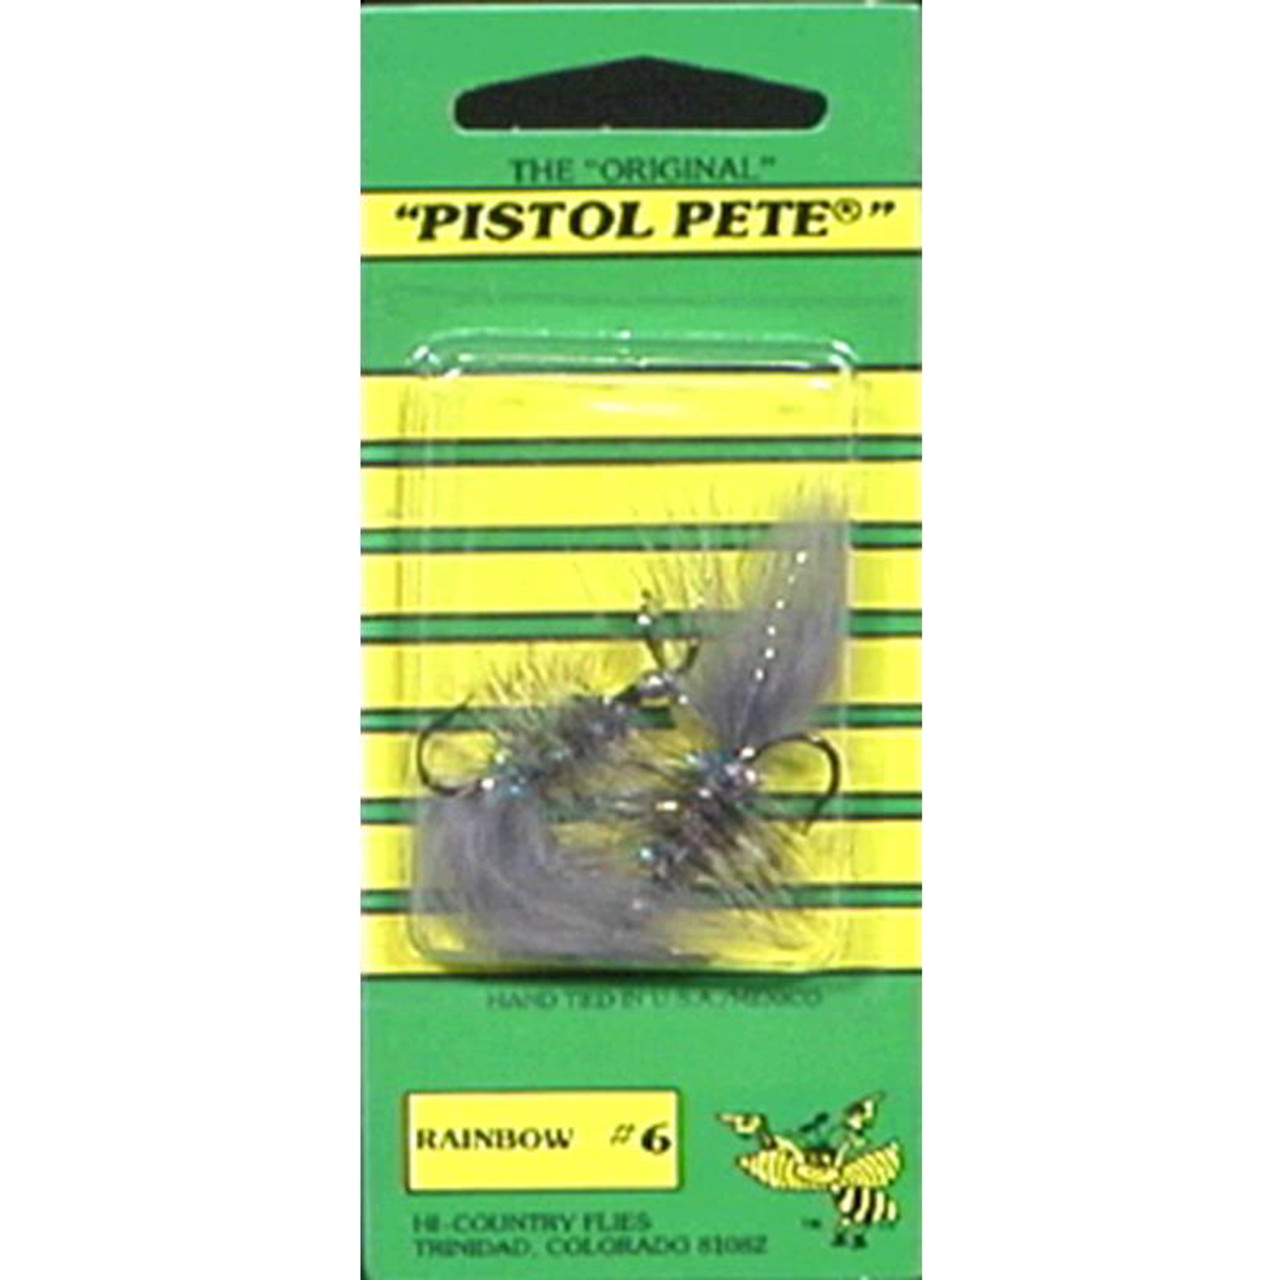 Pistol Pete - Hi-Country Flies Pistol Pete Size 6 - Rainbow